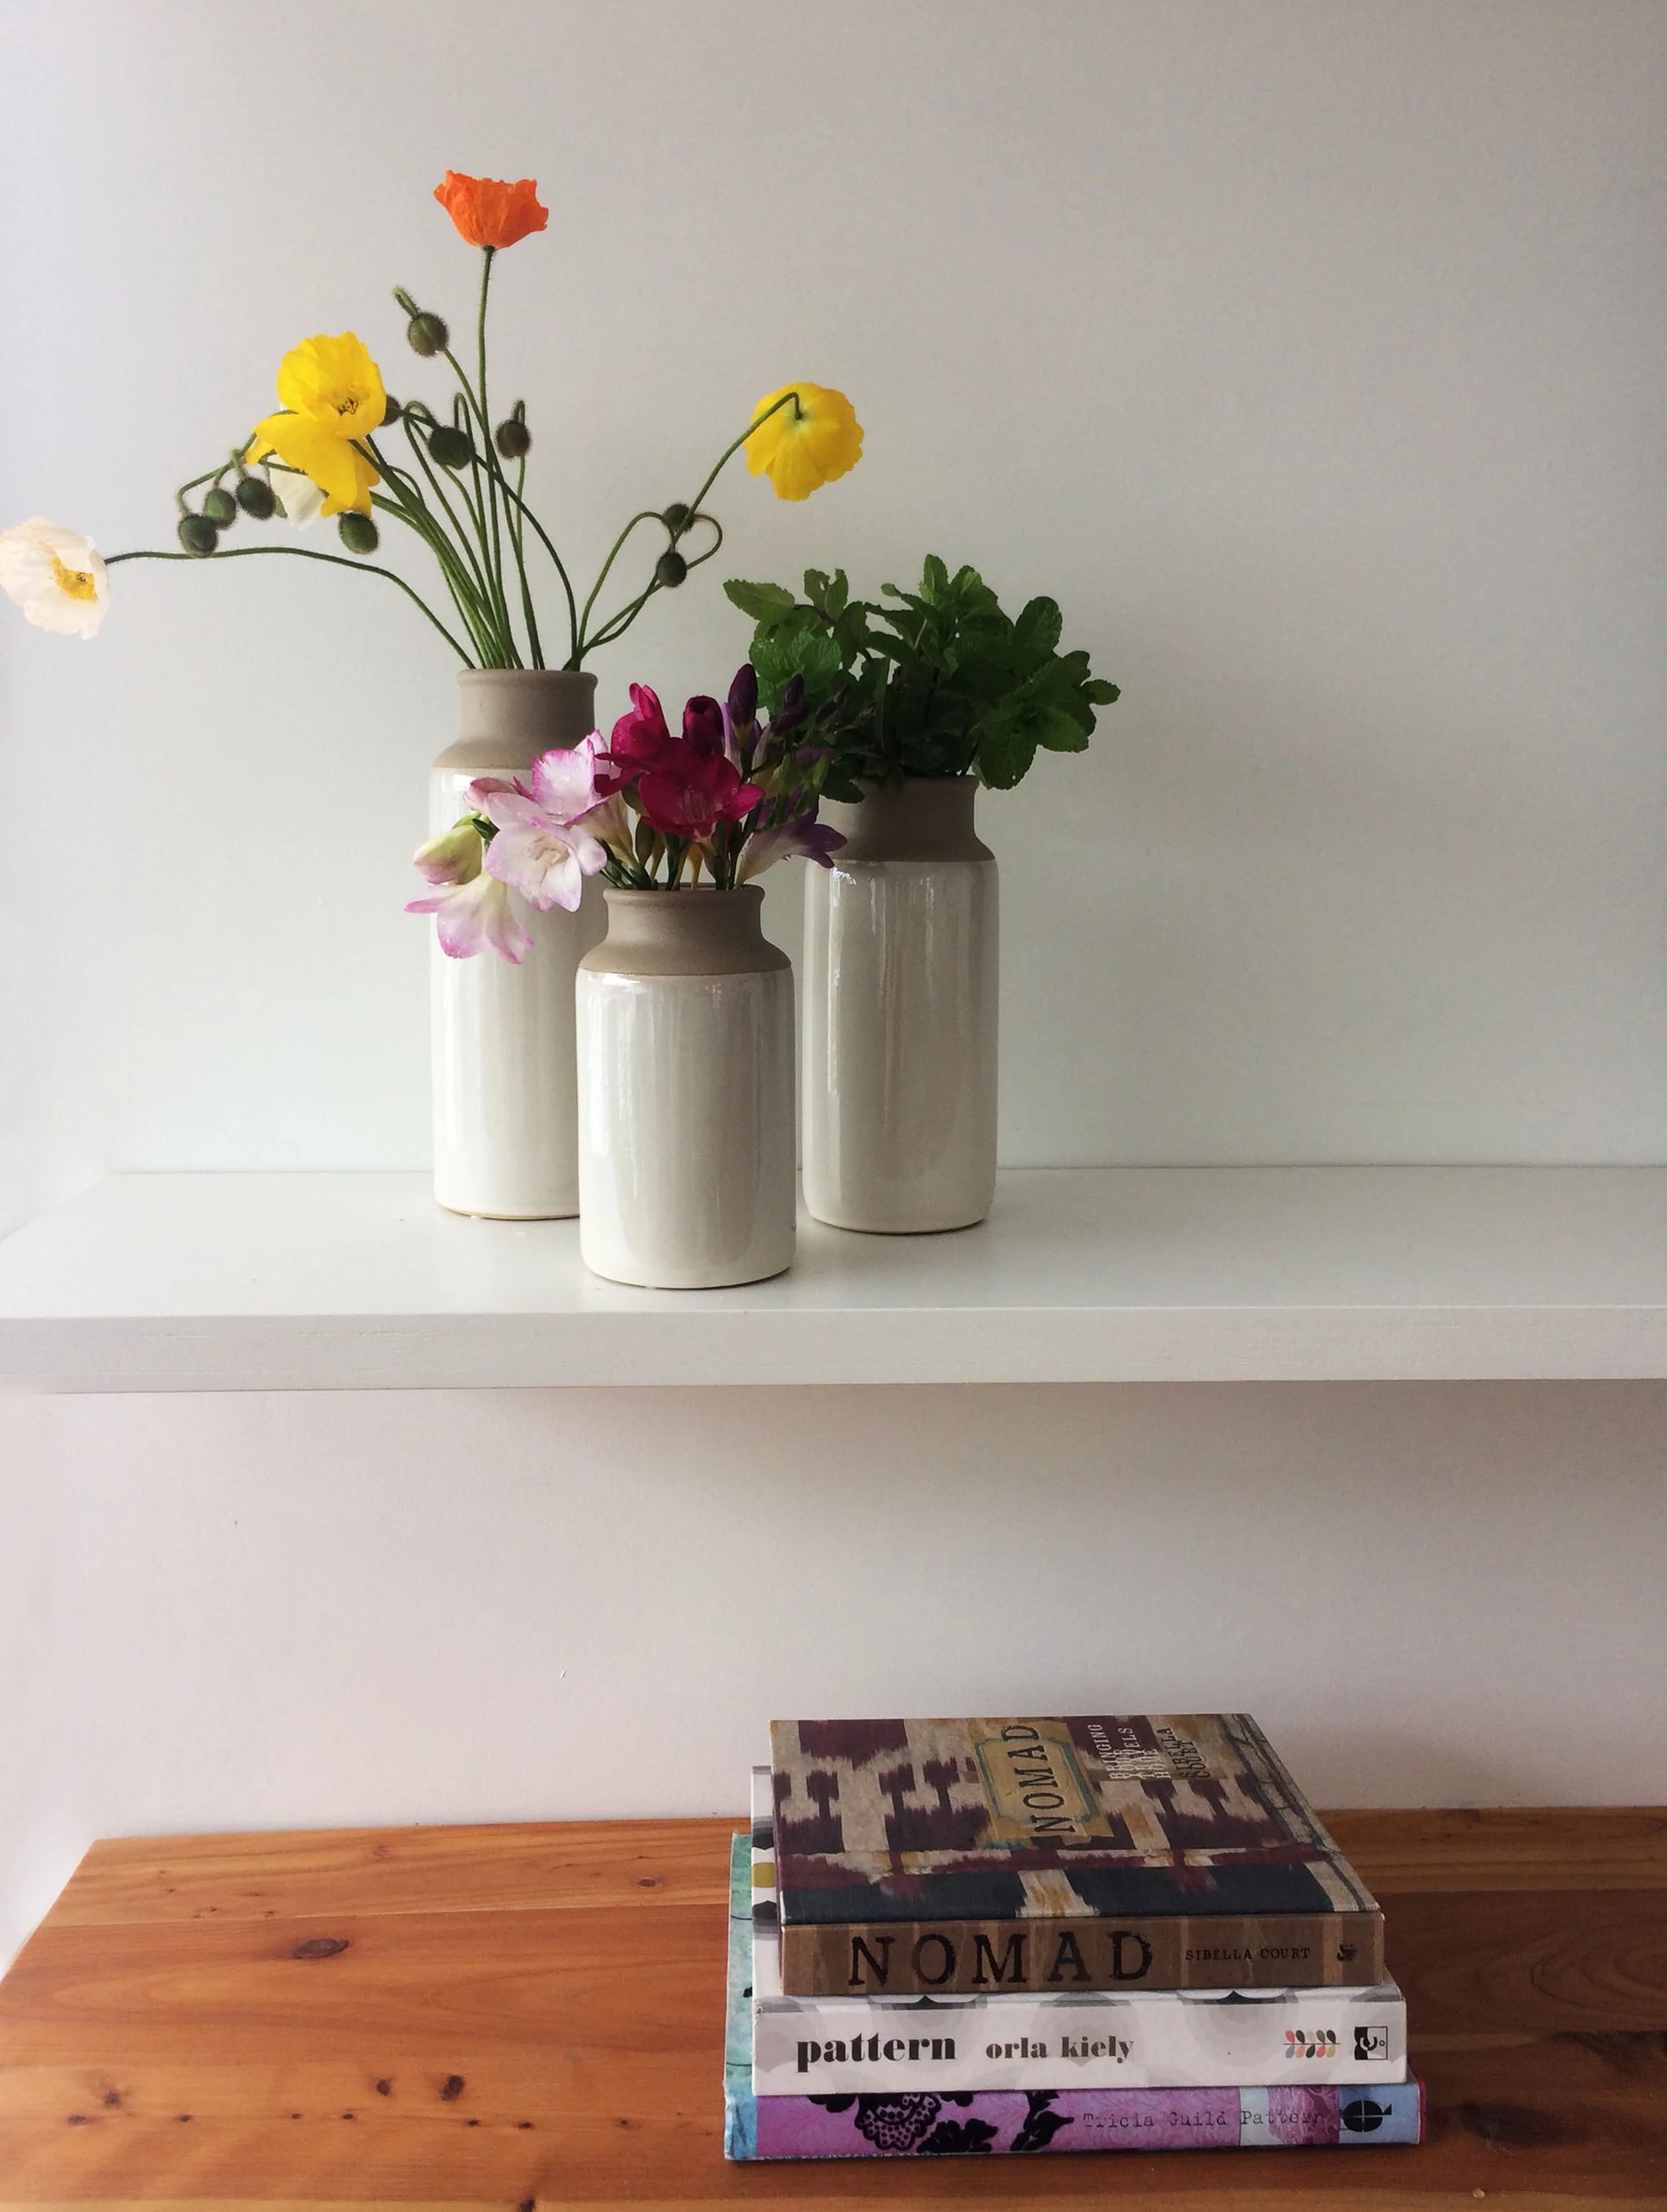 Three ceramic potter vase bottles on a shelf with fresh flowers in them